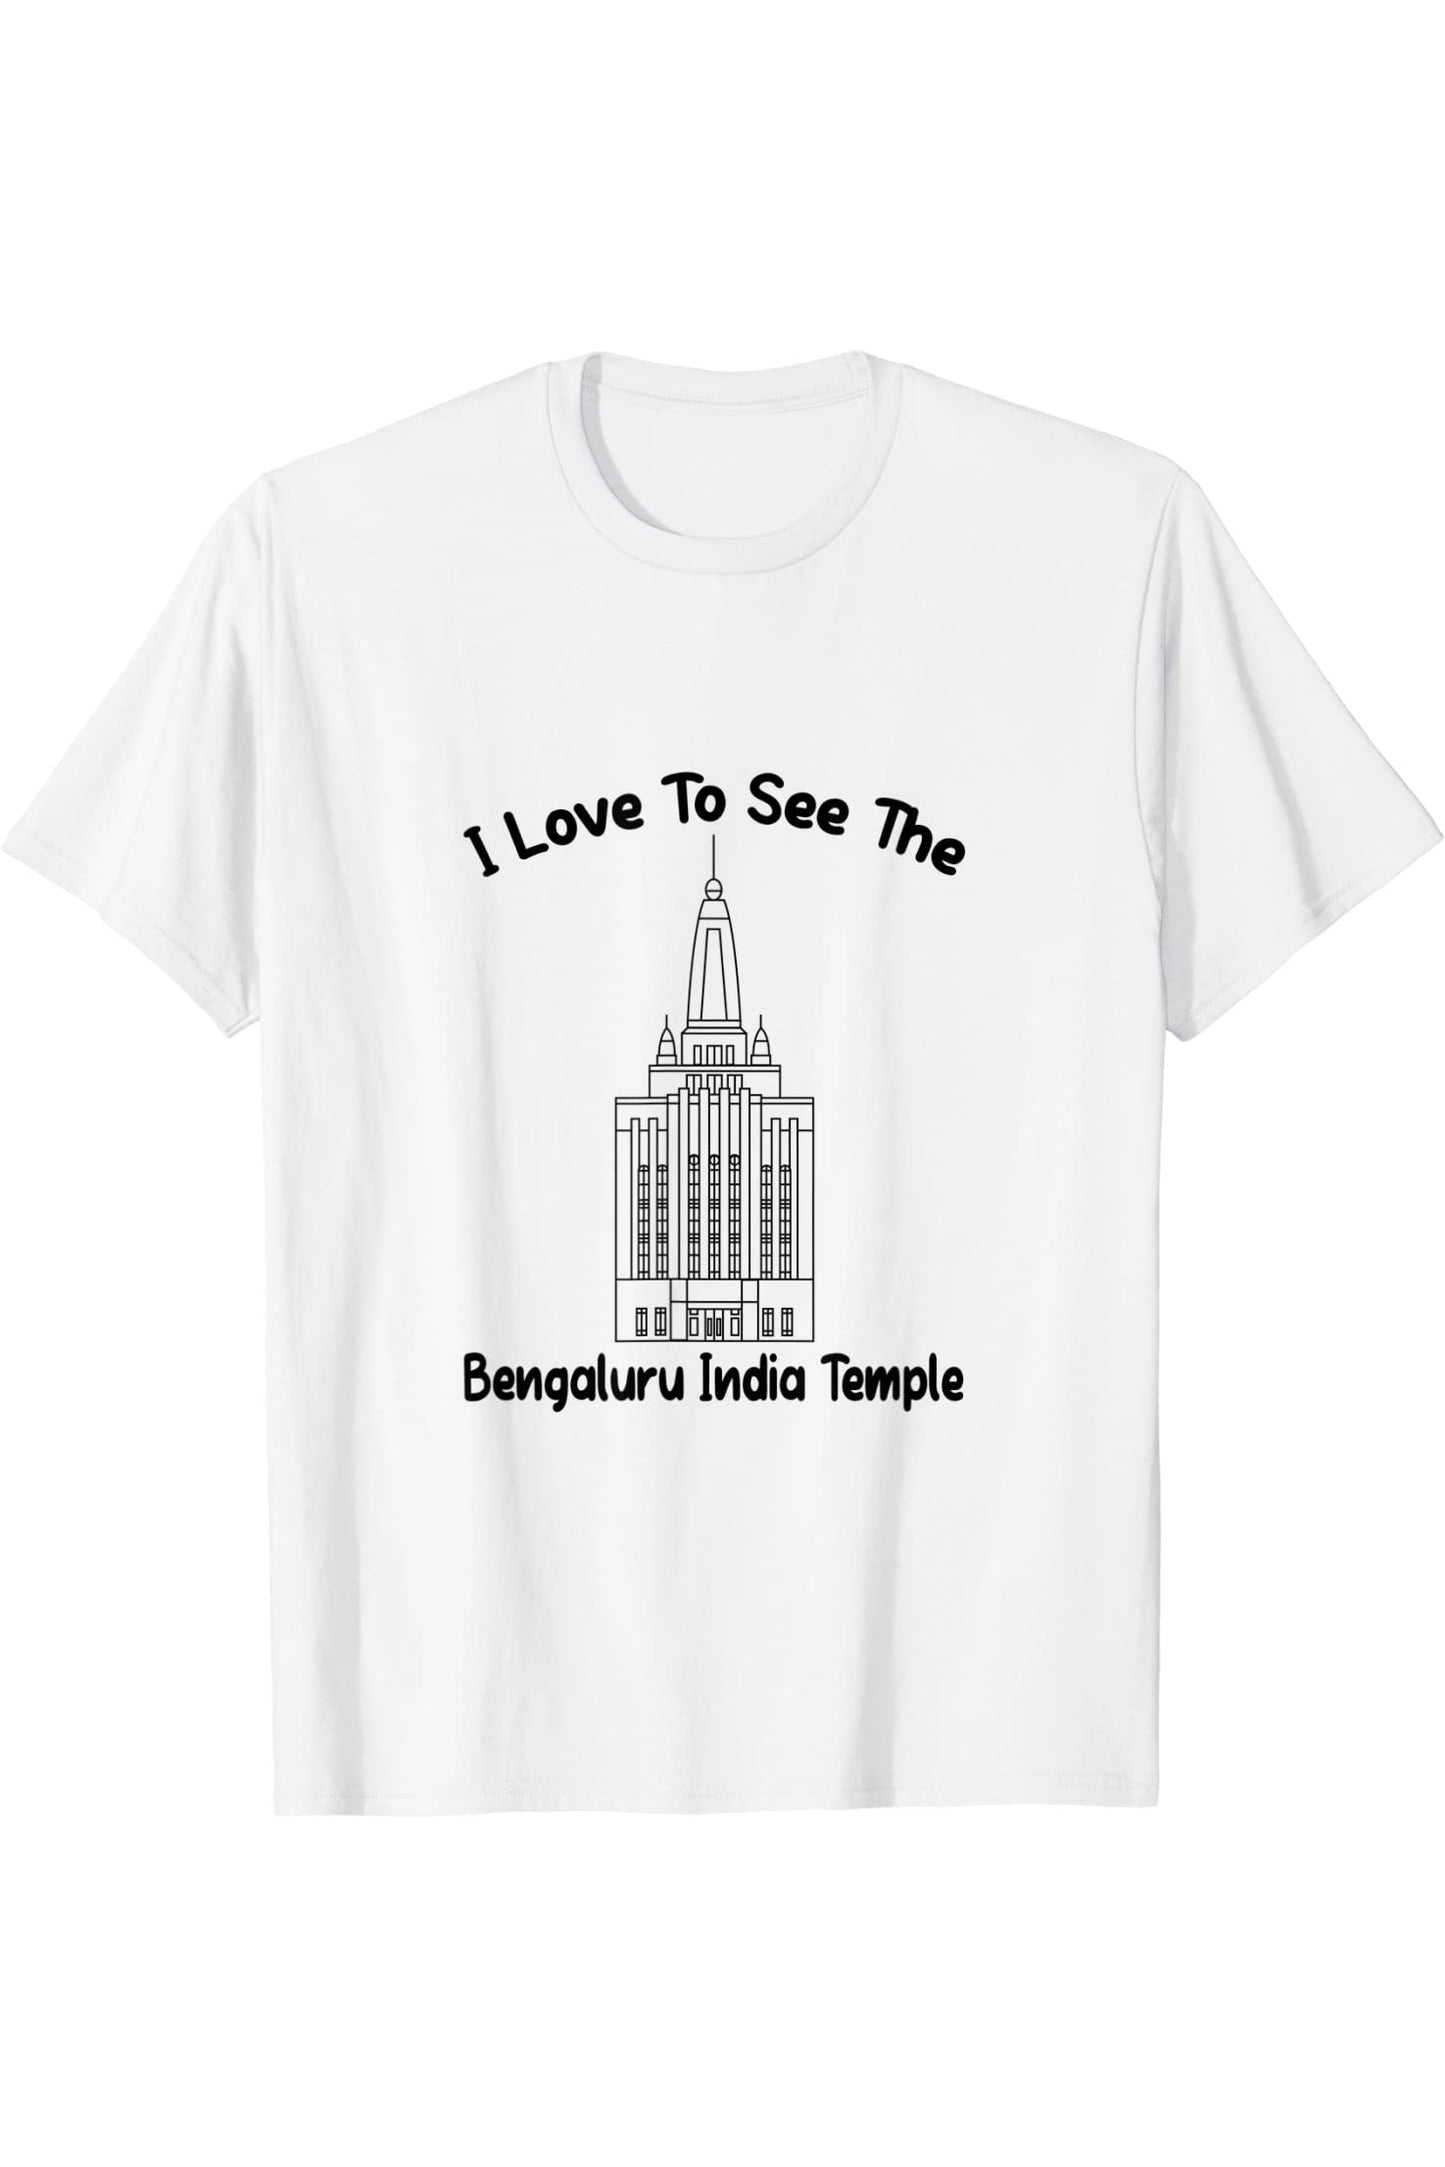 Bengaluru India Temple T-Shirt - Primary Style (English) US